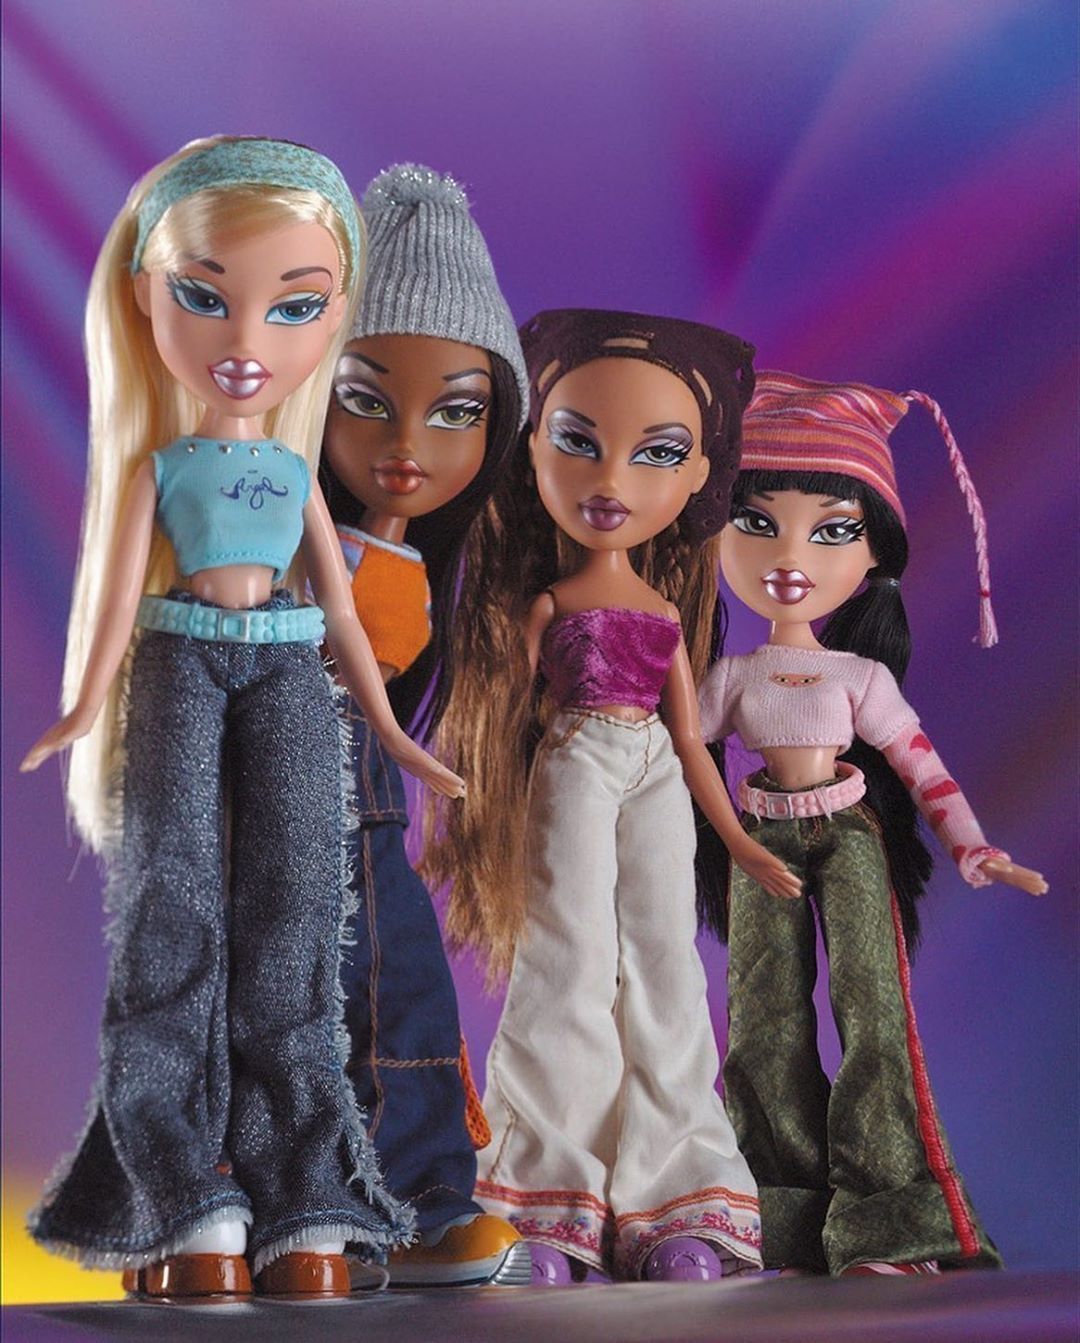 Four original Bratz dolls: Cloe, Sasha, Yasmin, and Jade